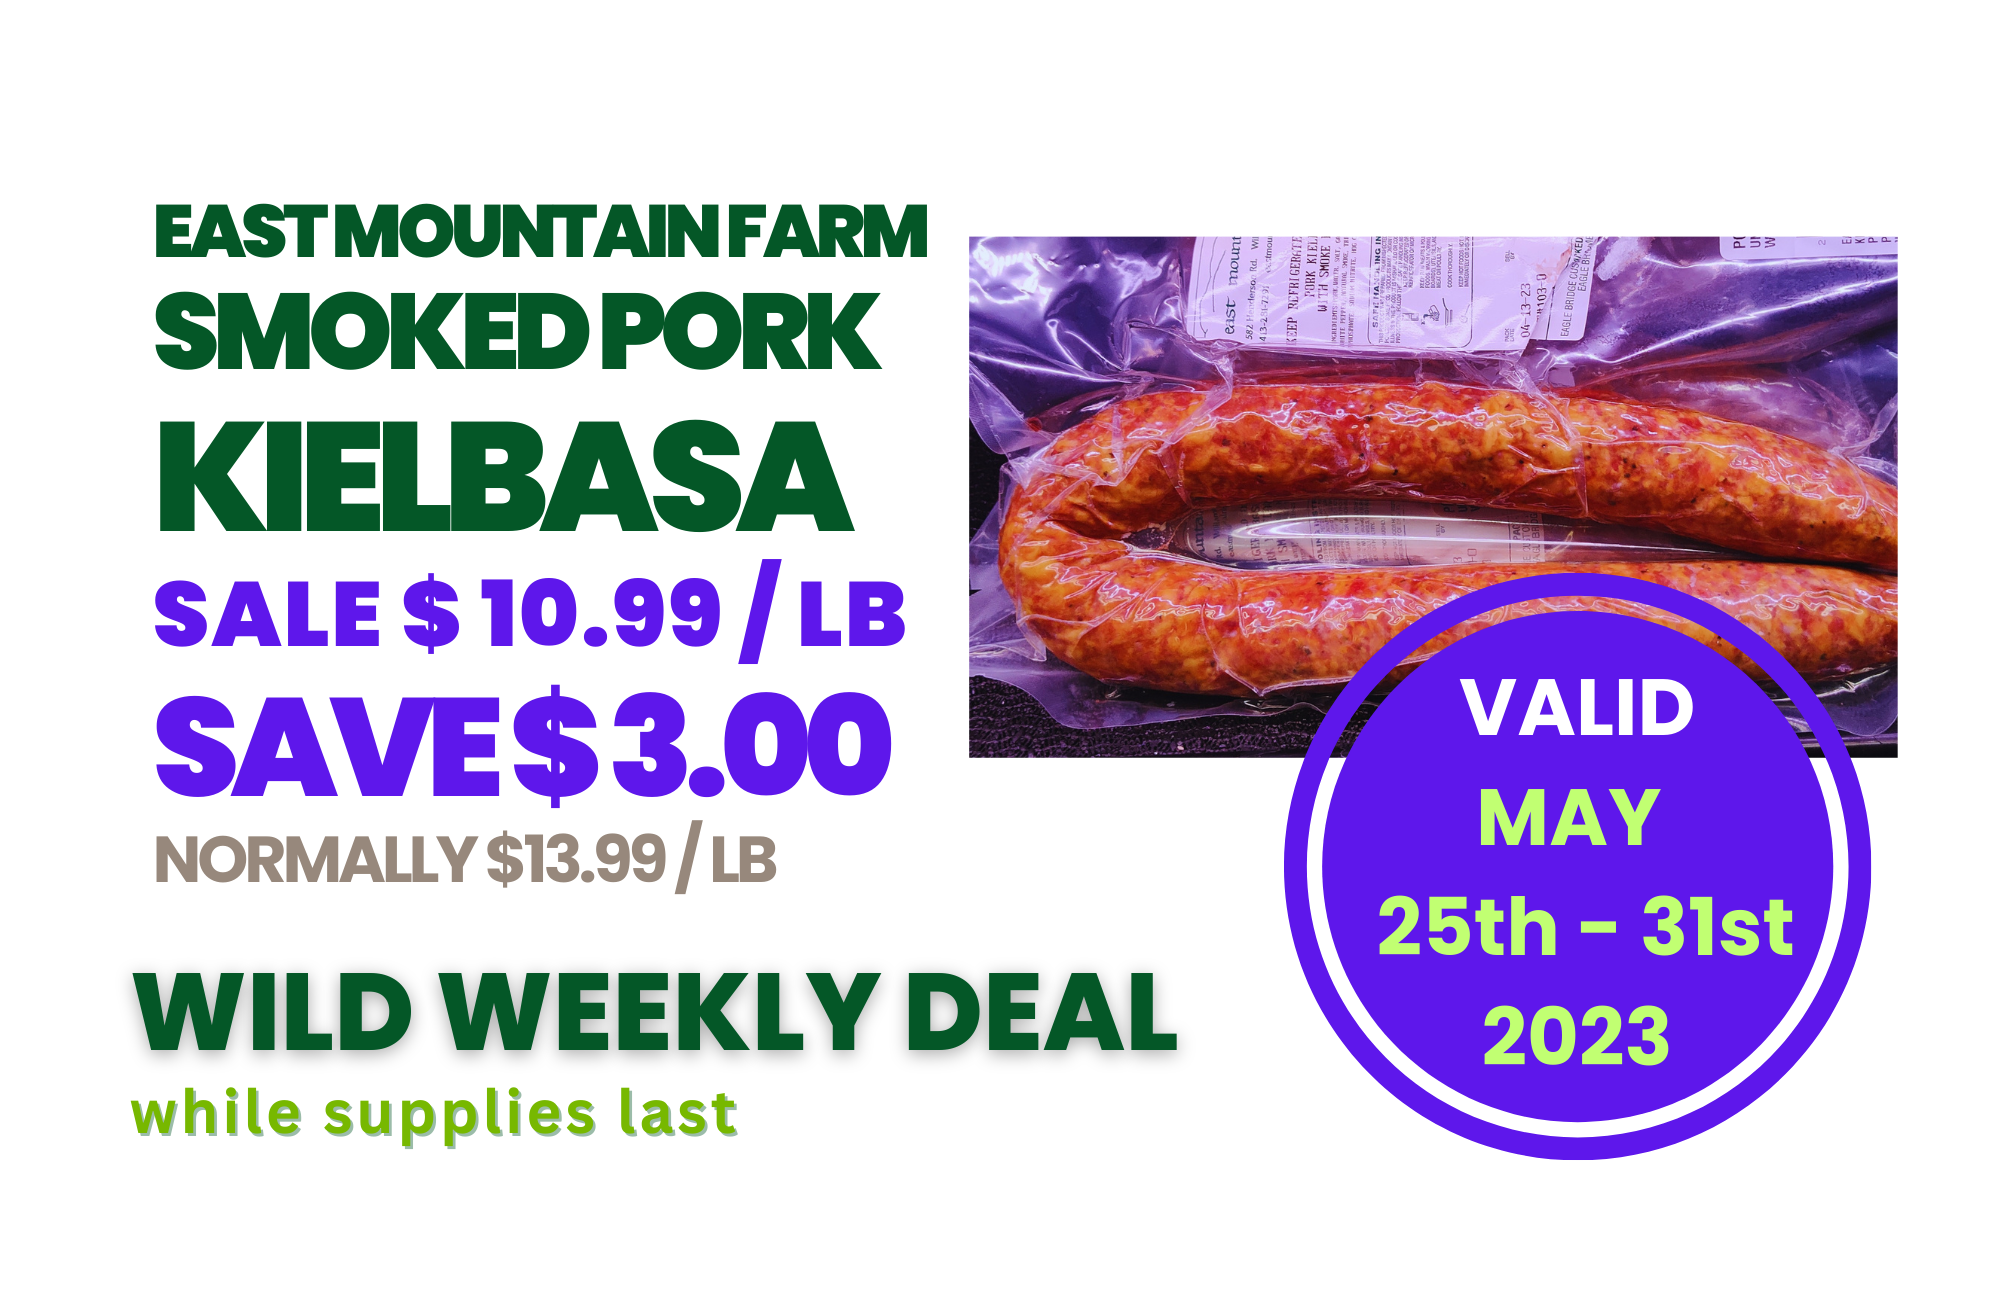 2023-0525-0531 Wild Weekend Deal East Mountain Farm Smoked Pork Keilbasa.png